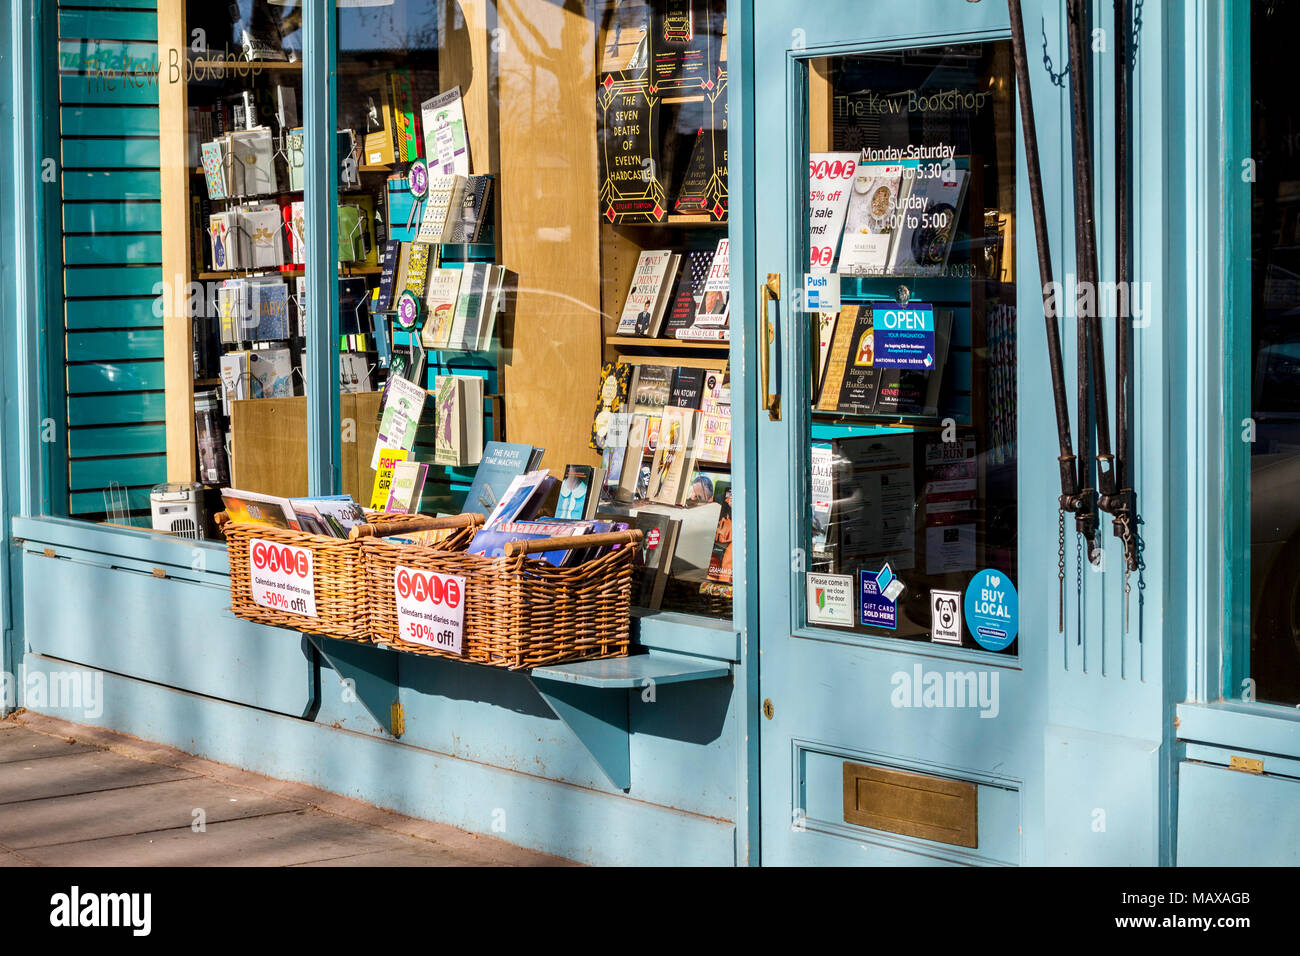 The Kew Bookshop, book shop, book store front,  Kew, London UK basket of books, window display books, window book display read reading concept Stock Photo